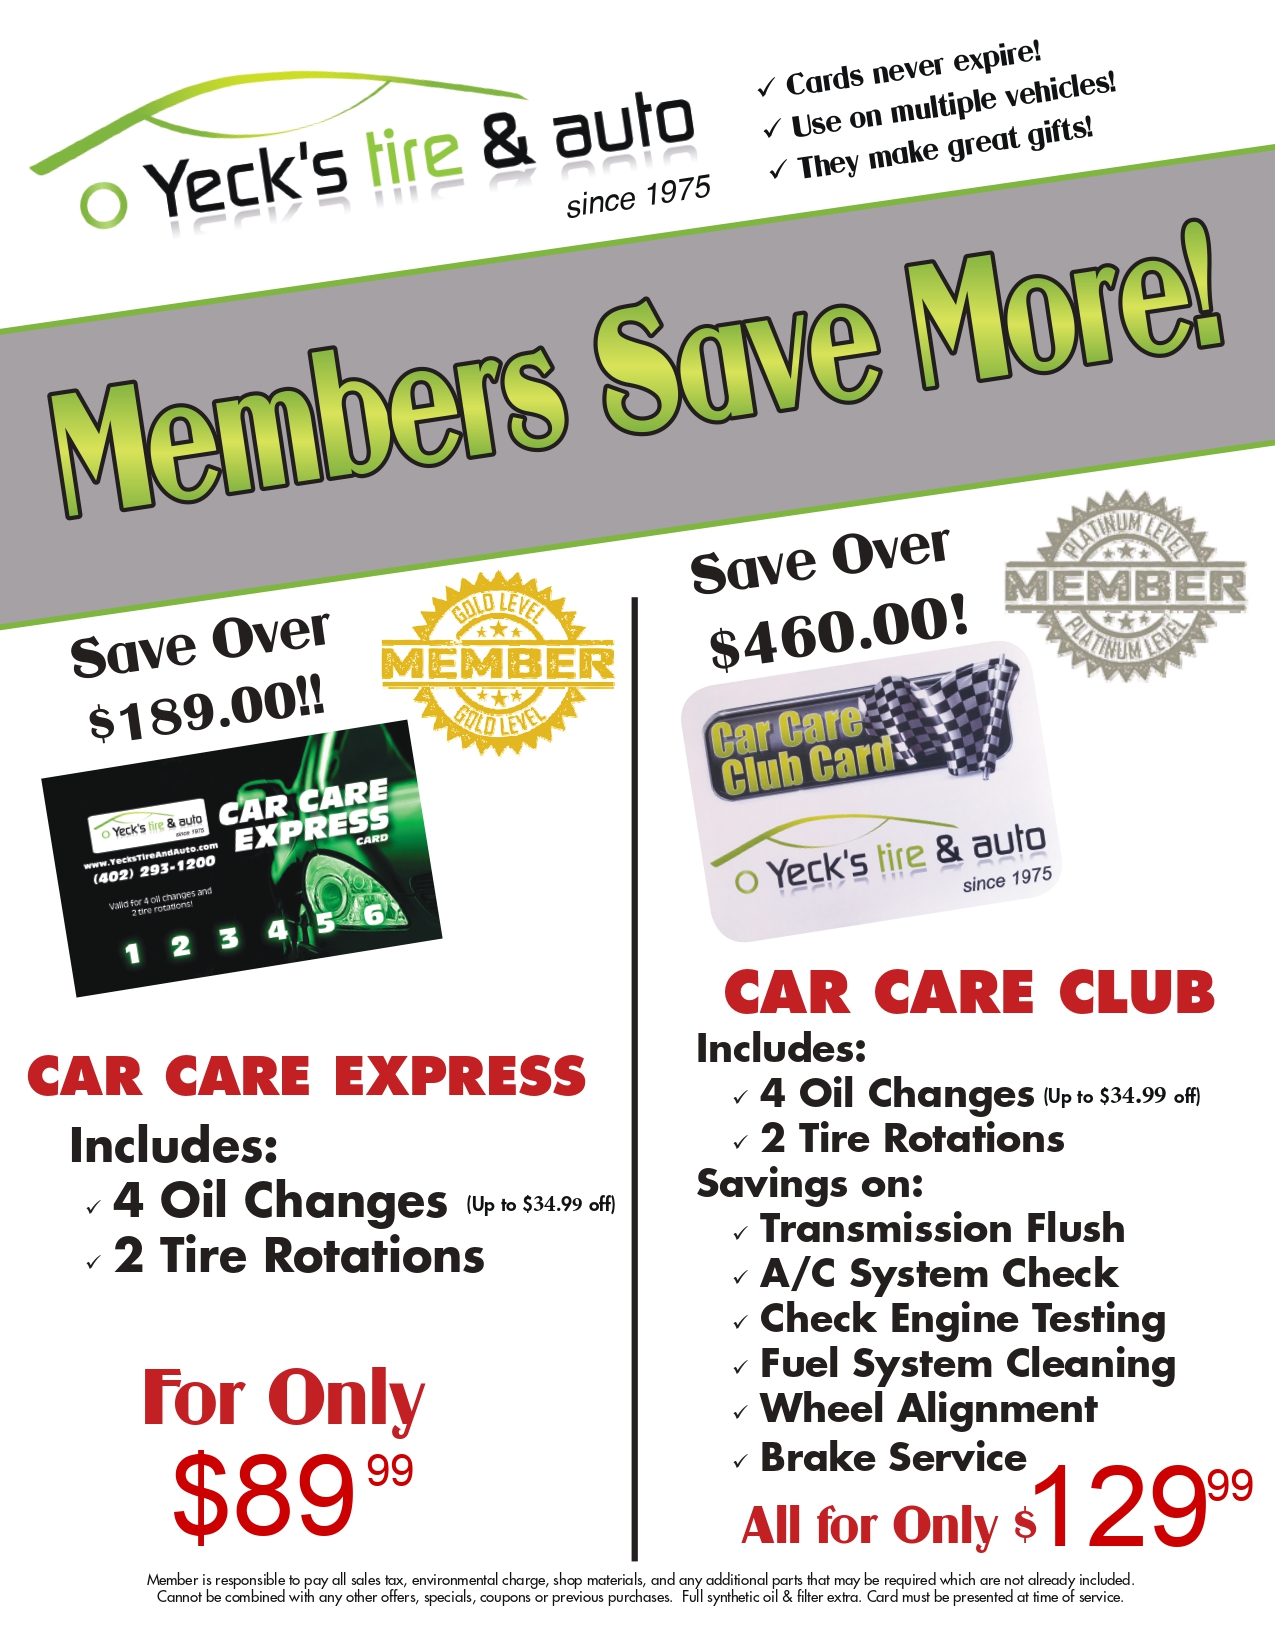 Car Care Club | Yeck's Tire & Auto